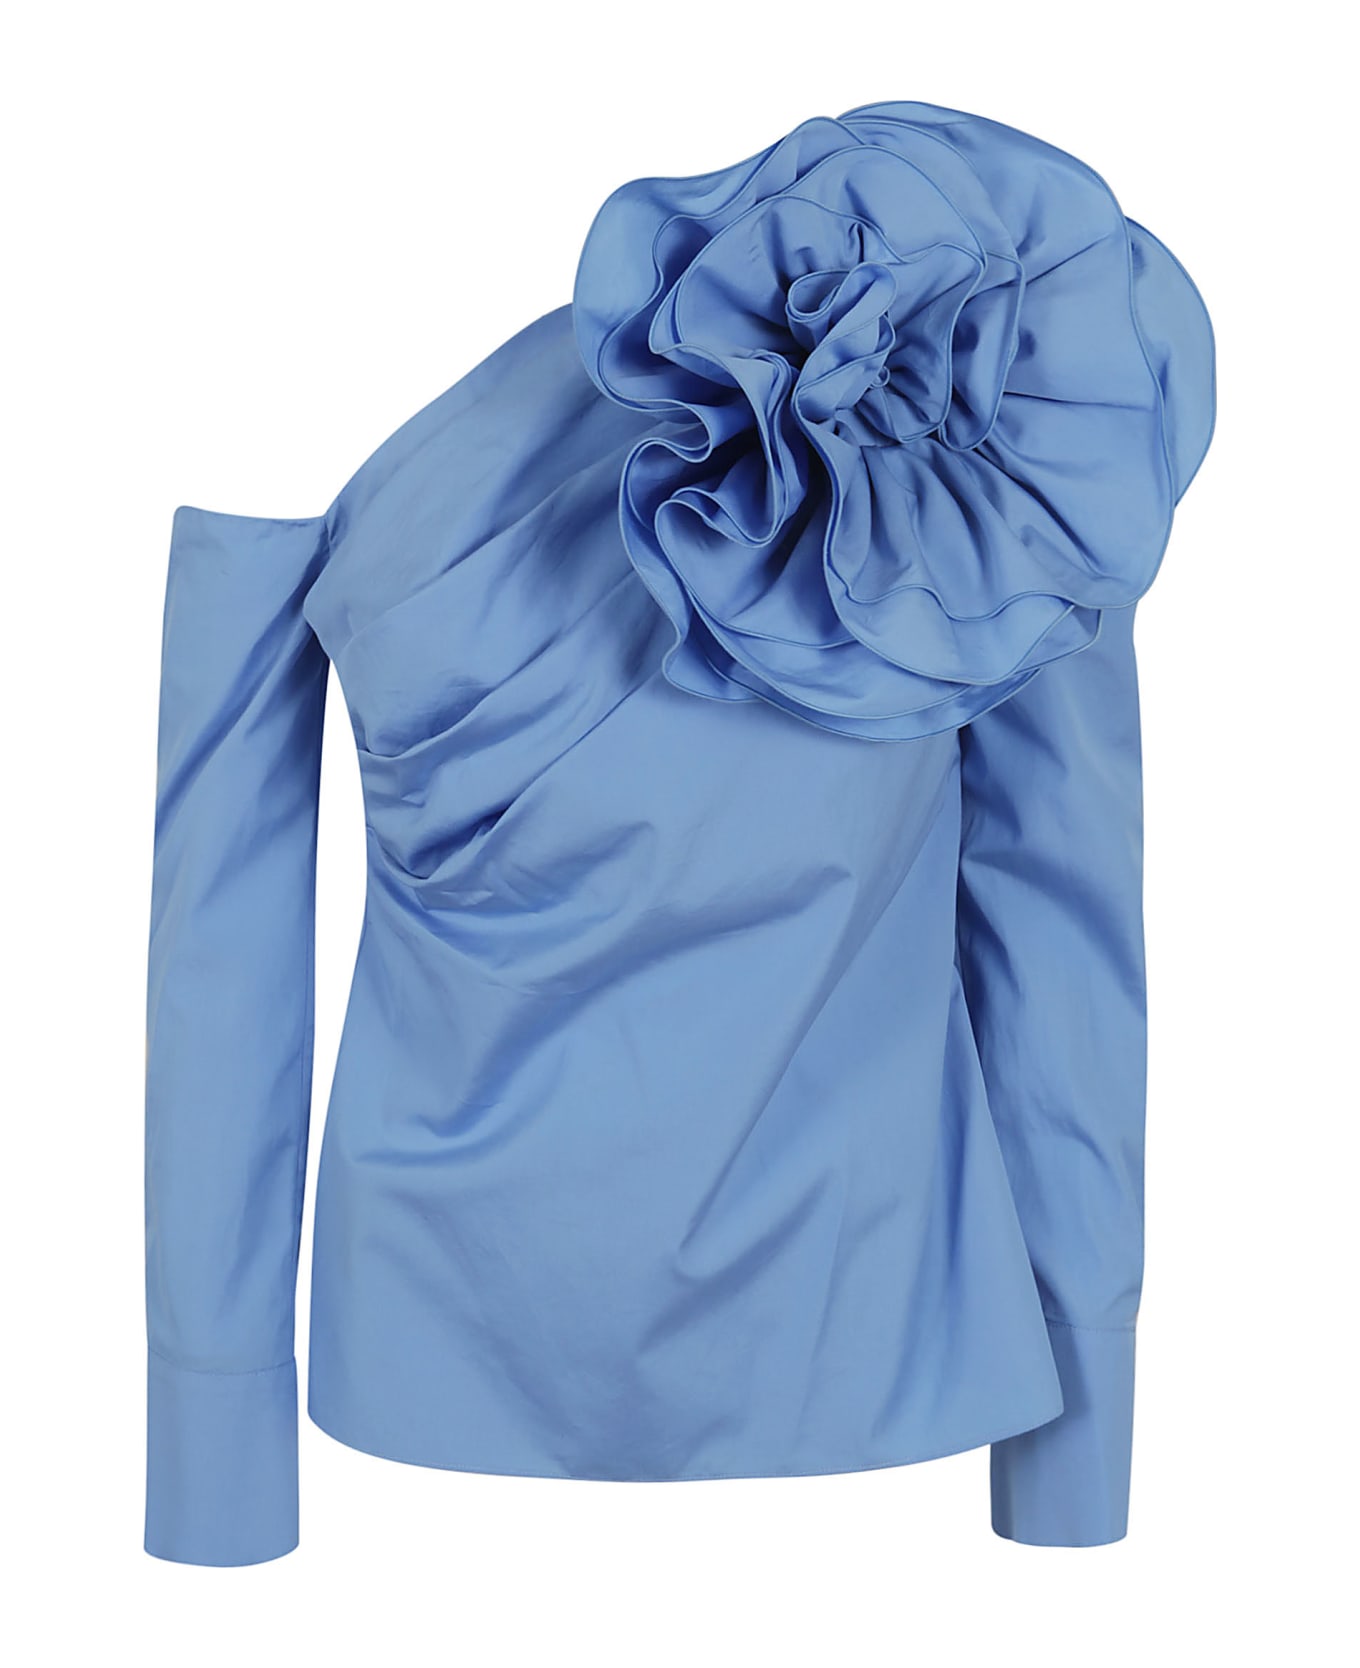 Balmain Large Rose Popeline Shirt - Dm Bleu Ciel シャツ